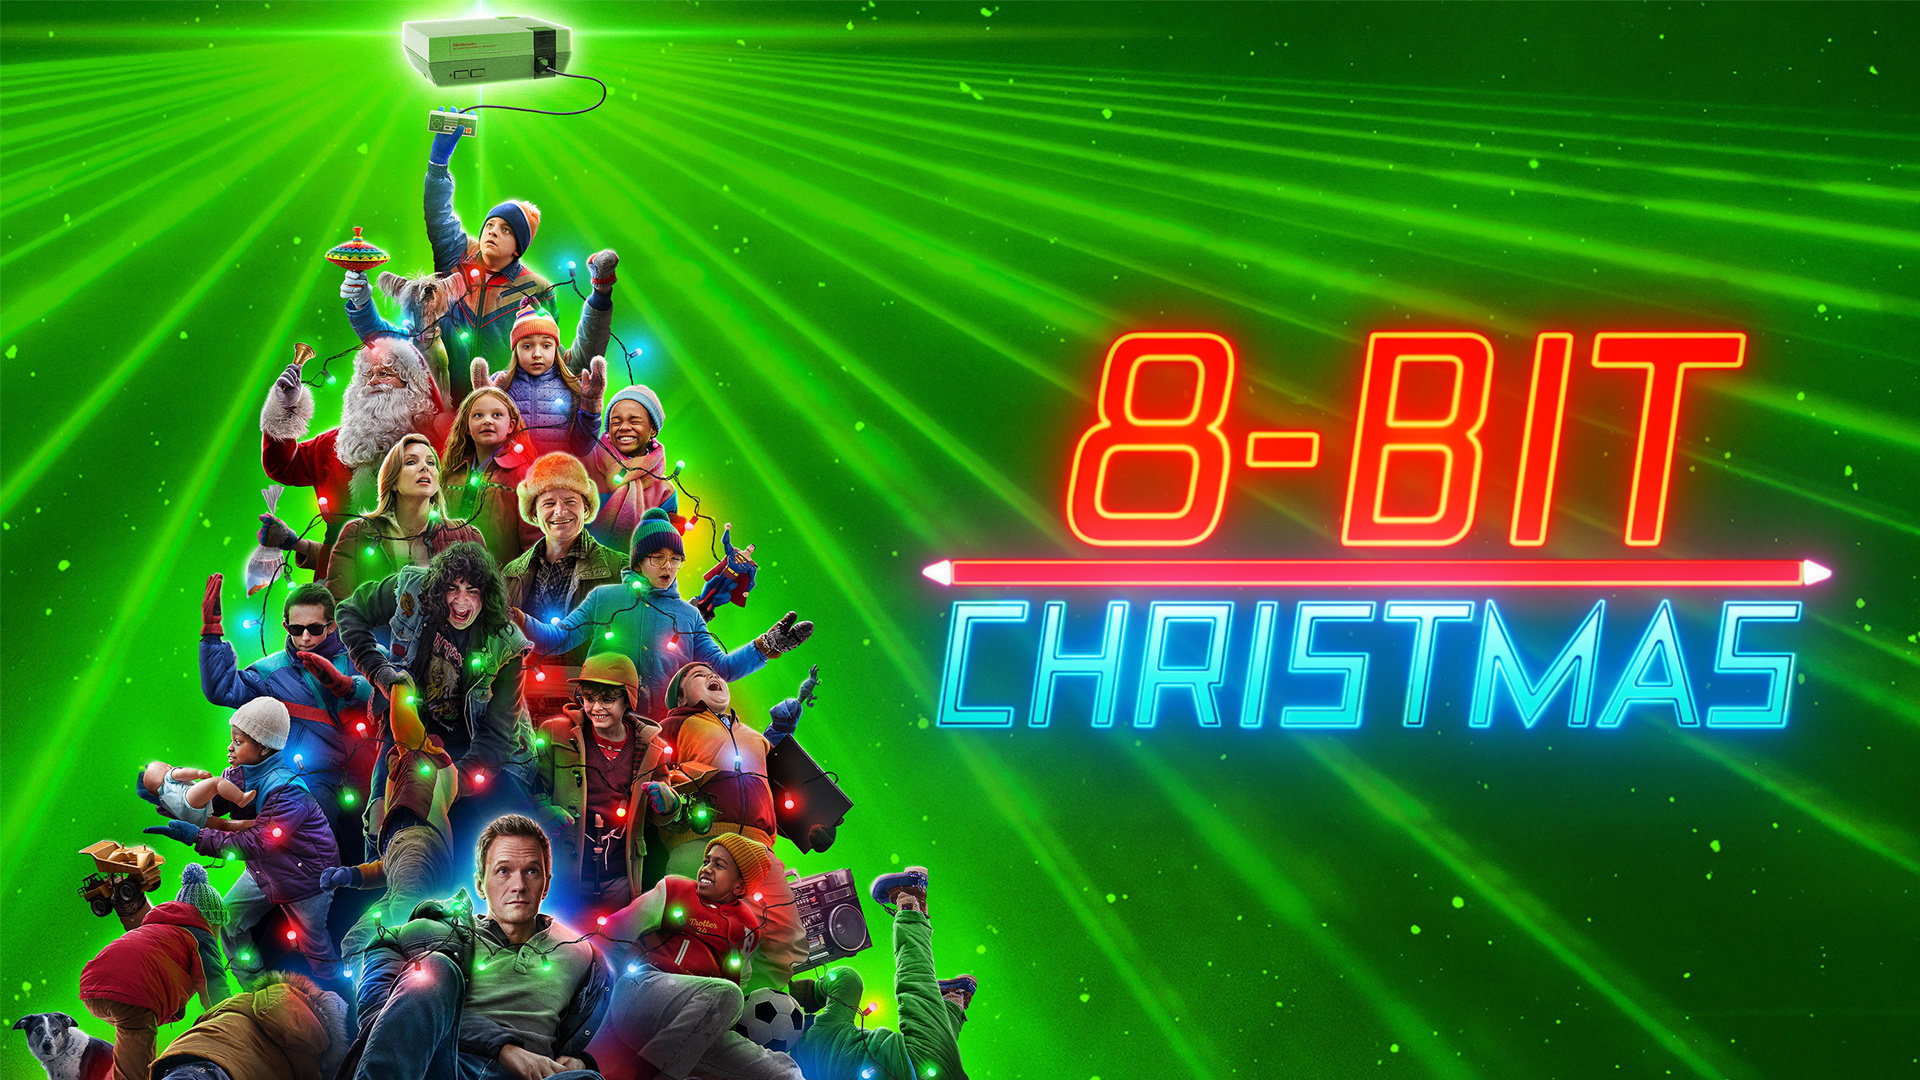 Watch 8-Bit Christmas, Stream online, Retro gaming, Holiday entertainment, 1920x1080 Full HD Desktop